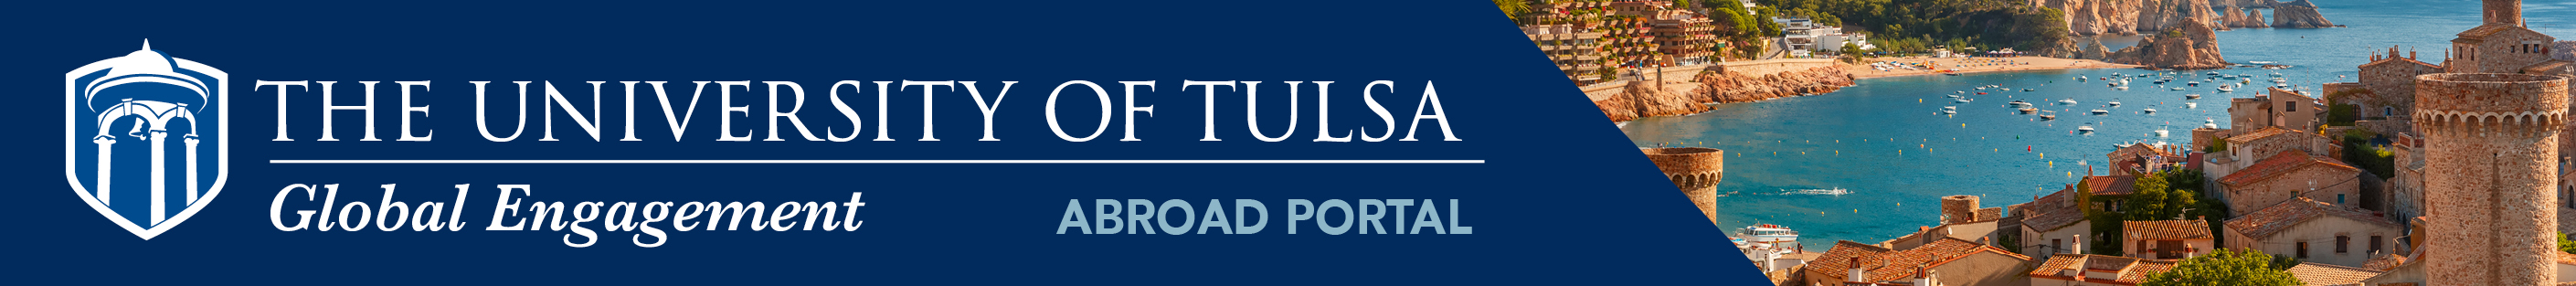 Center for Global Engagement - The University of Tulsa